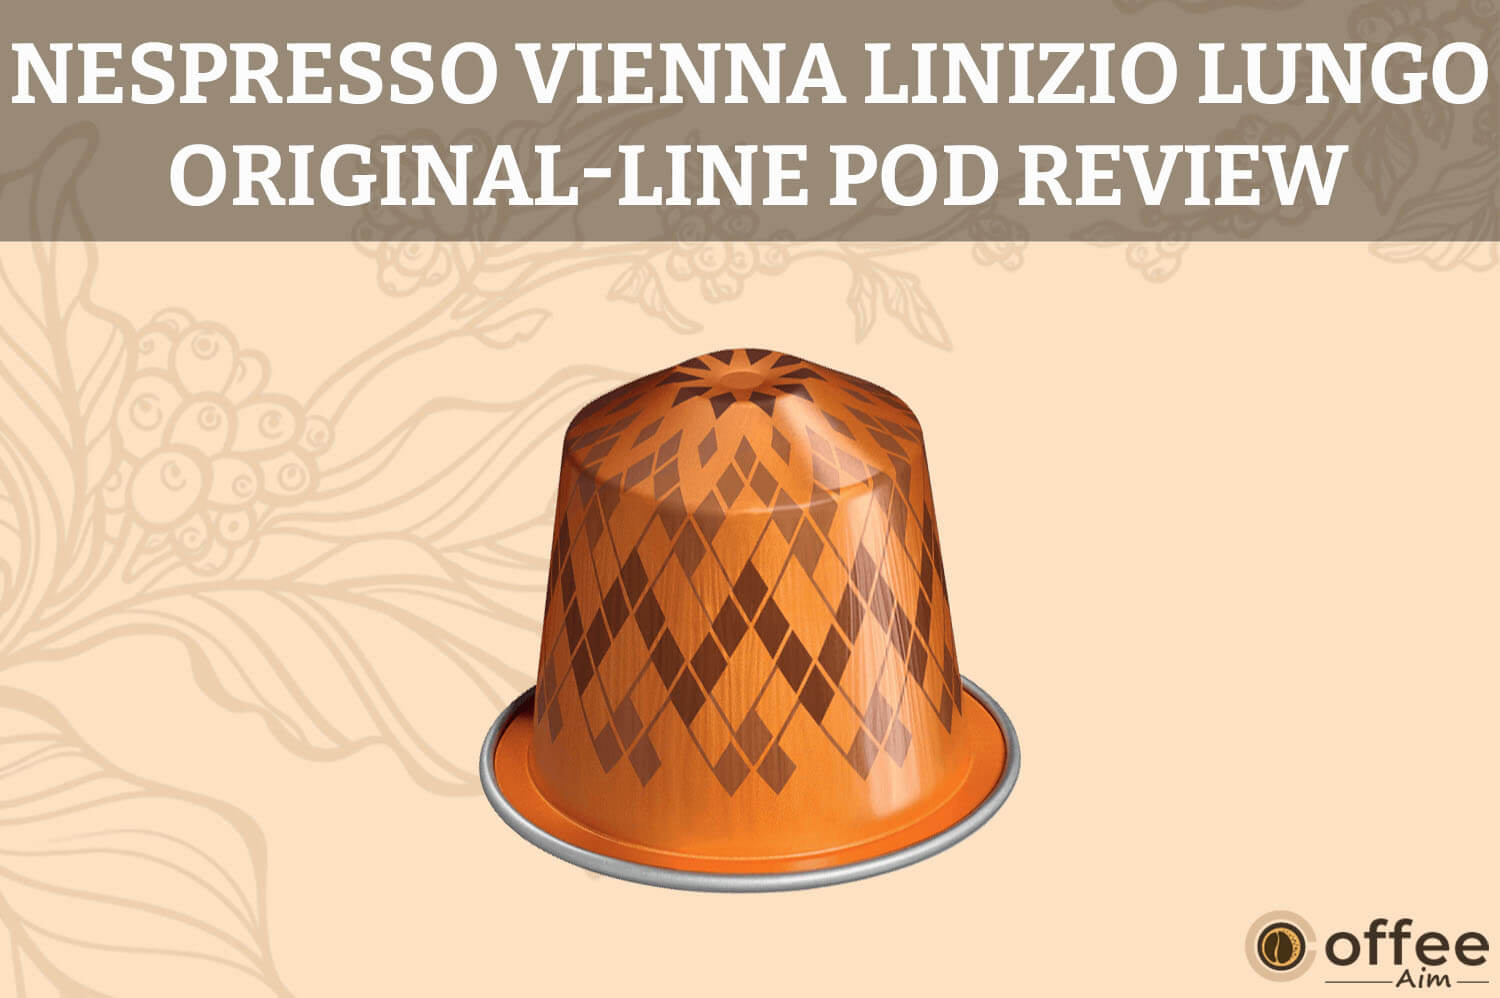 Featured image for the article "Nespresso Vienna Linizio Lungo Original-Line Pod Review"